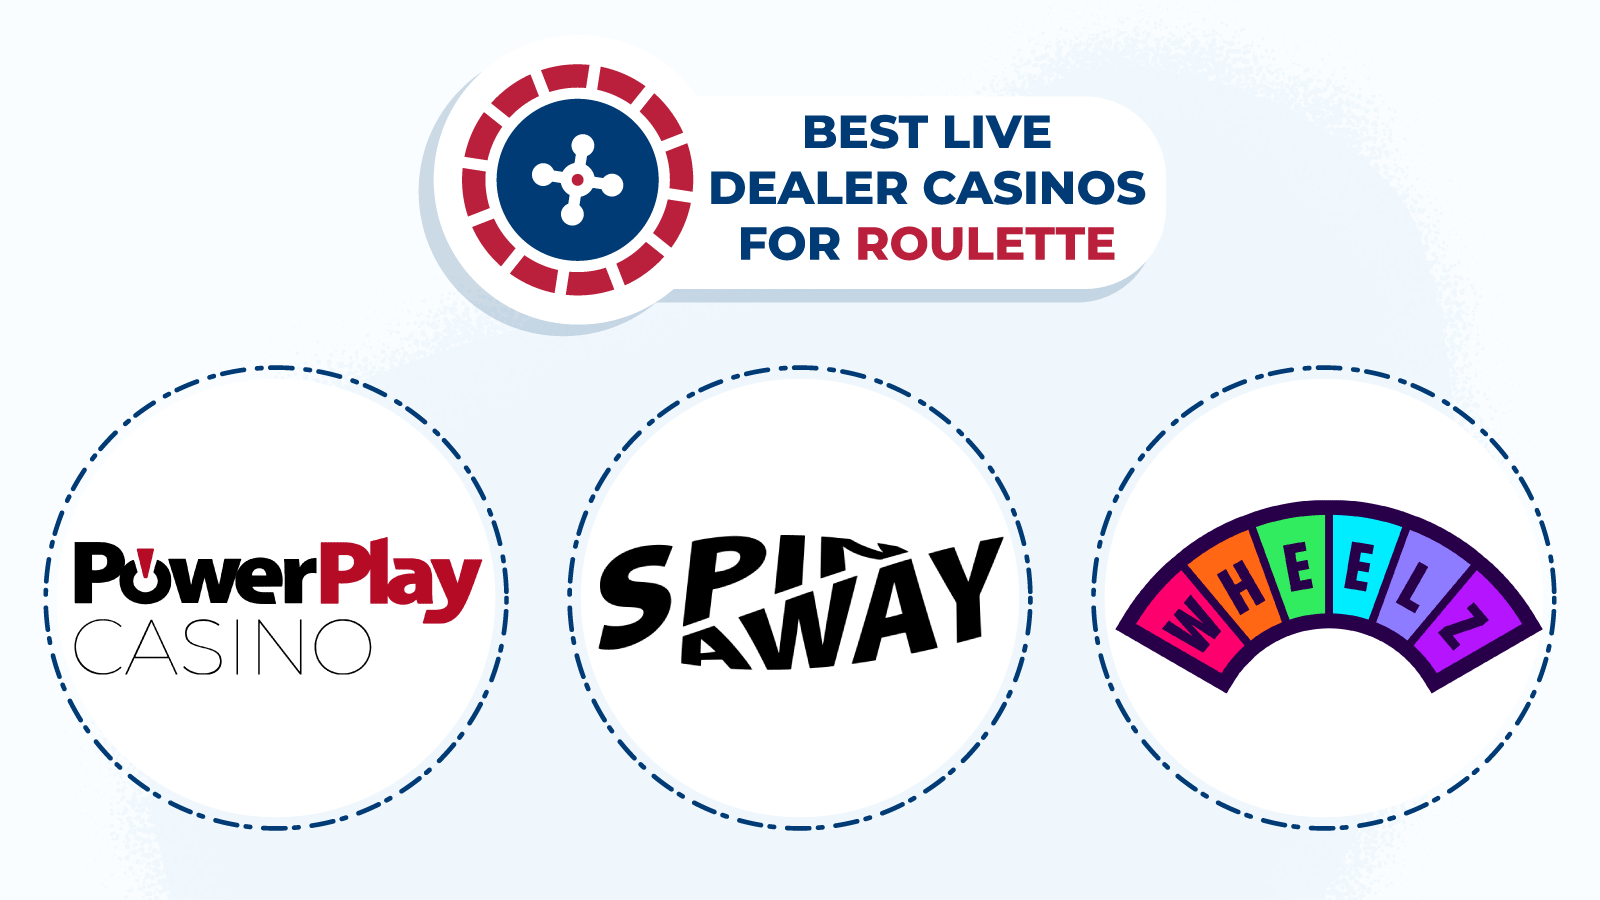 Best live dealer casinos for Roulette